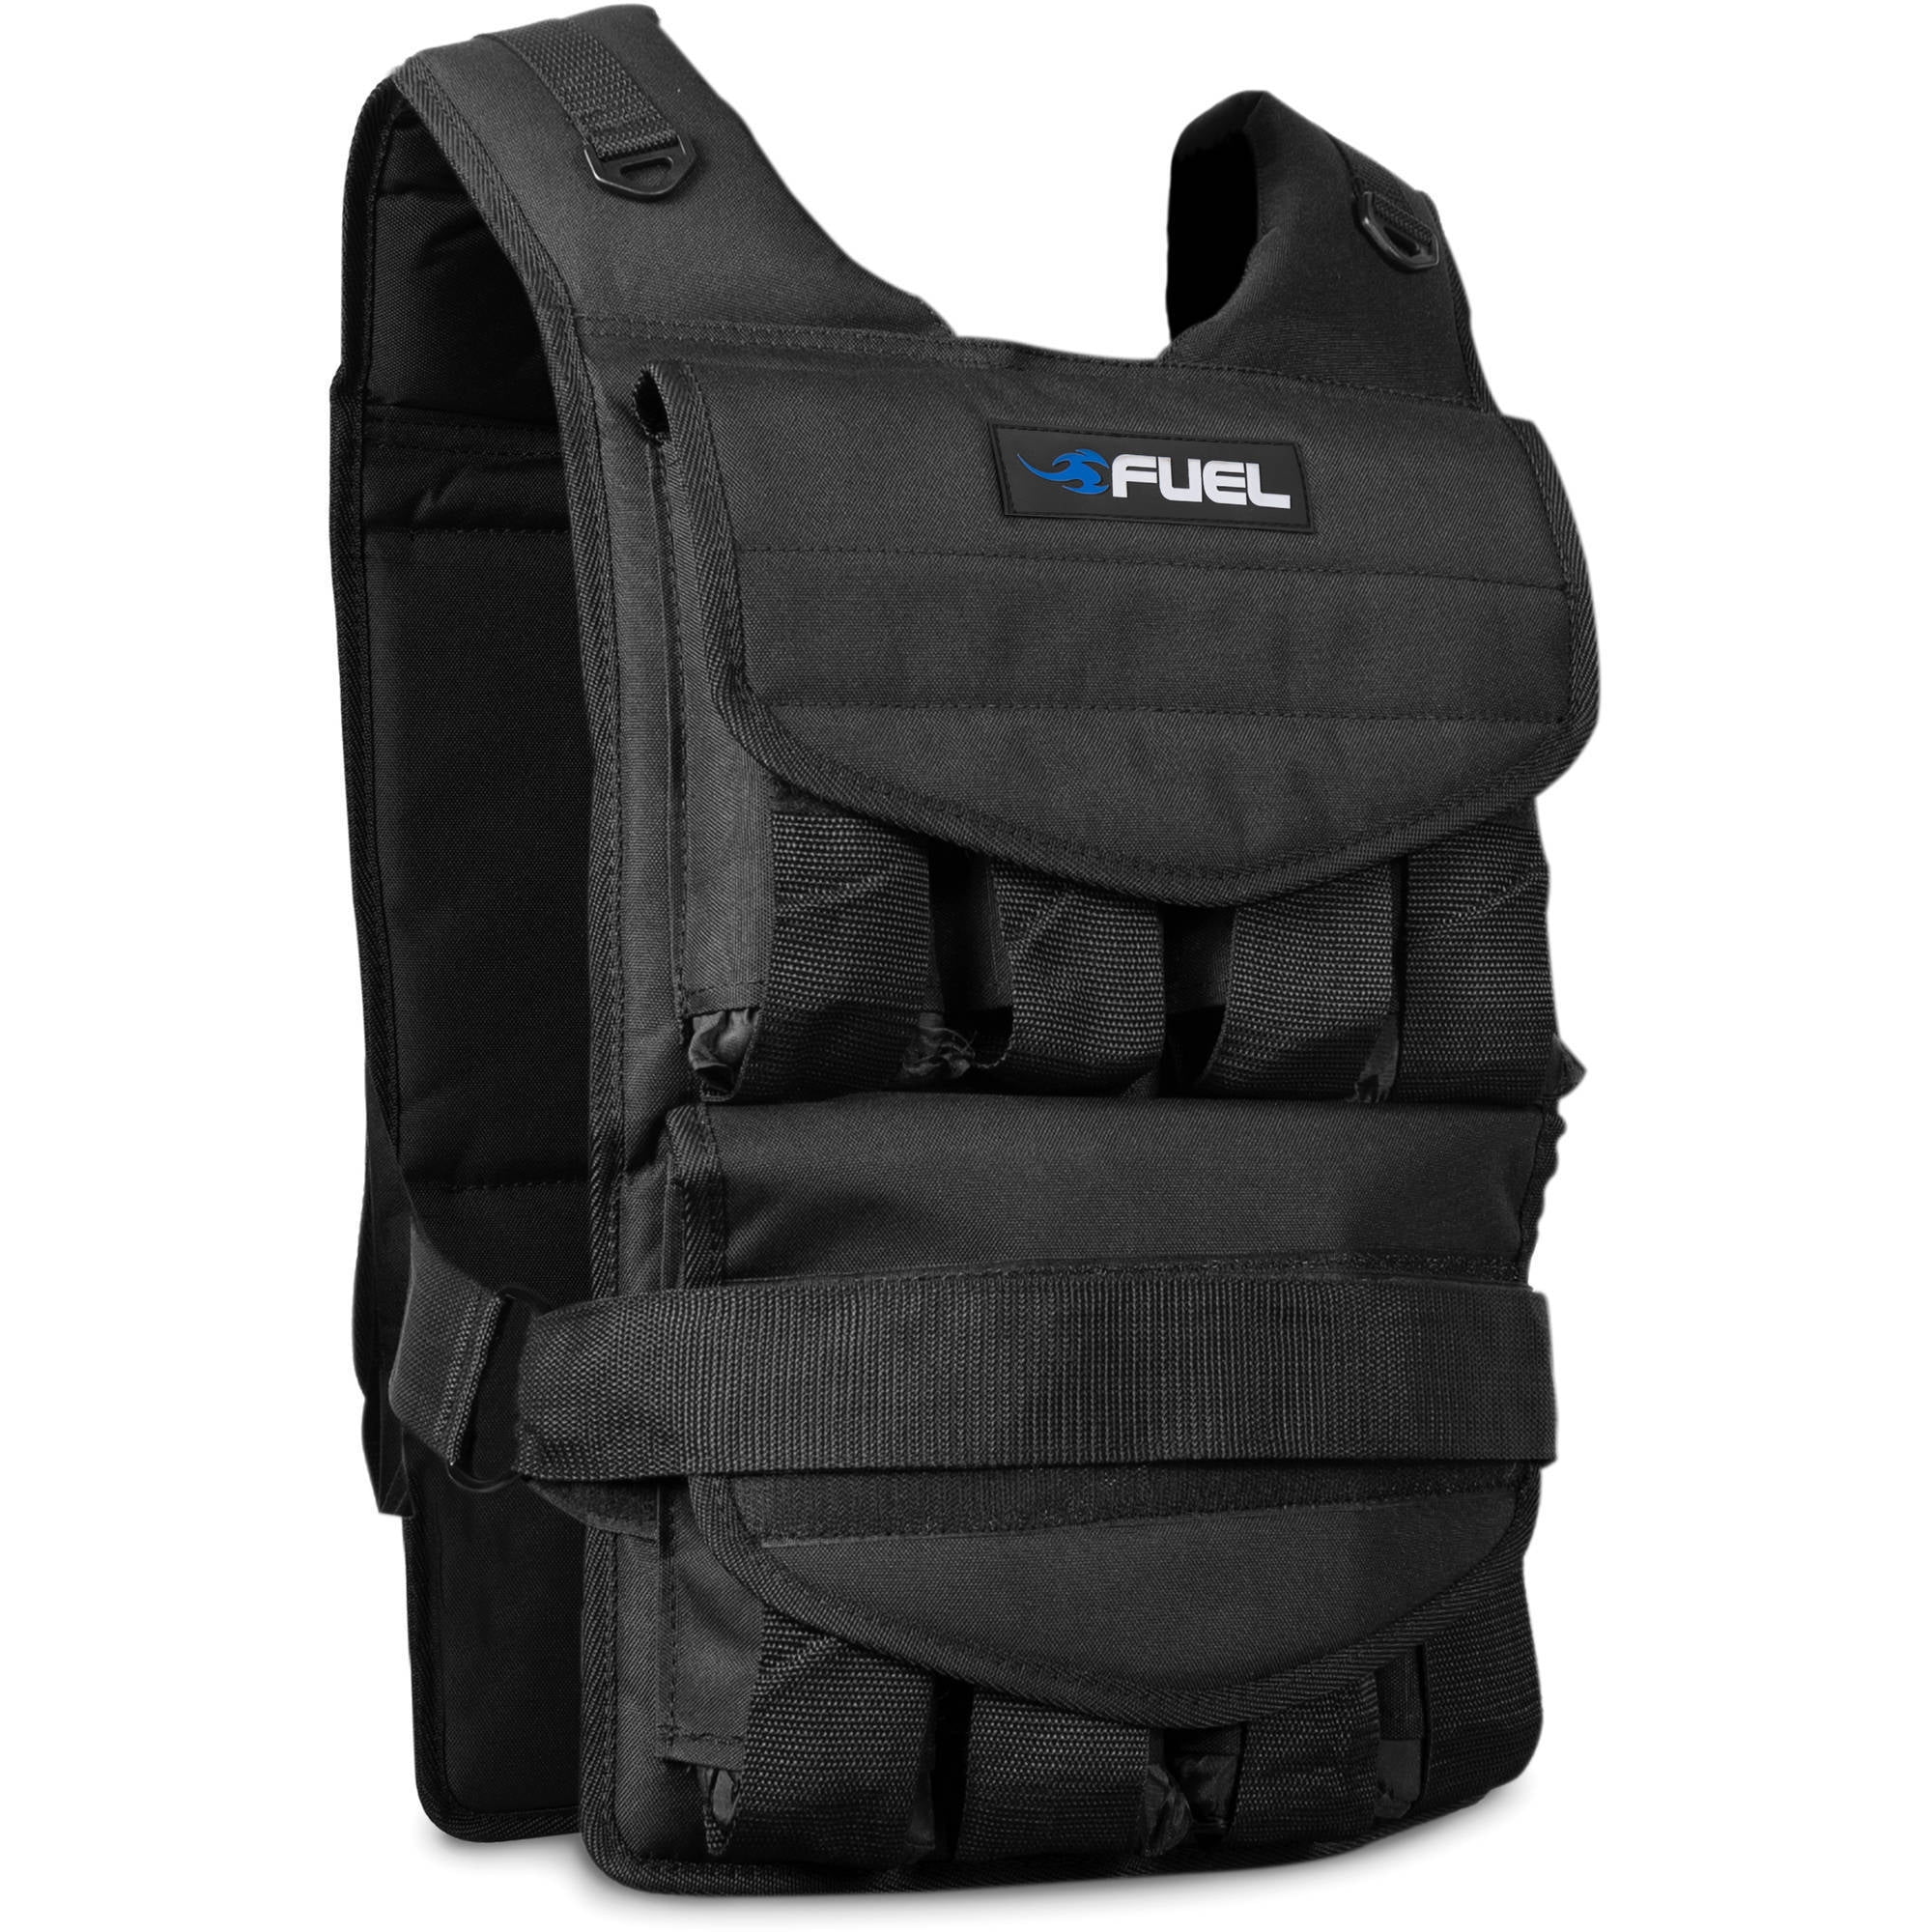 Fuel Pureformance Adjustable Weighted Vest, 60 lbs 